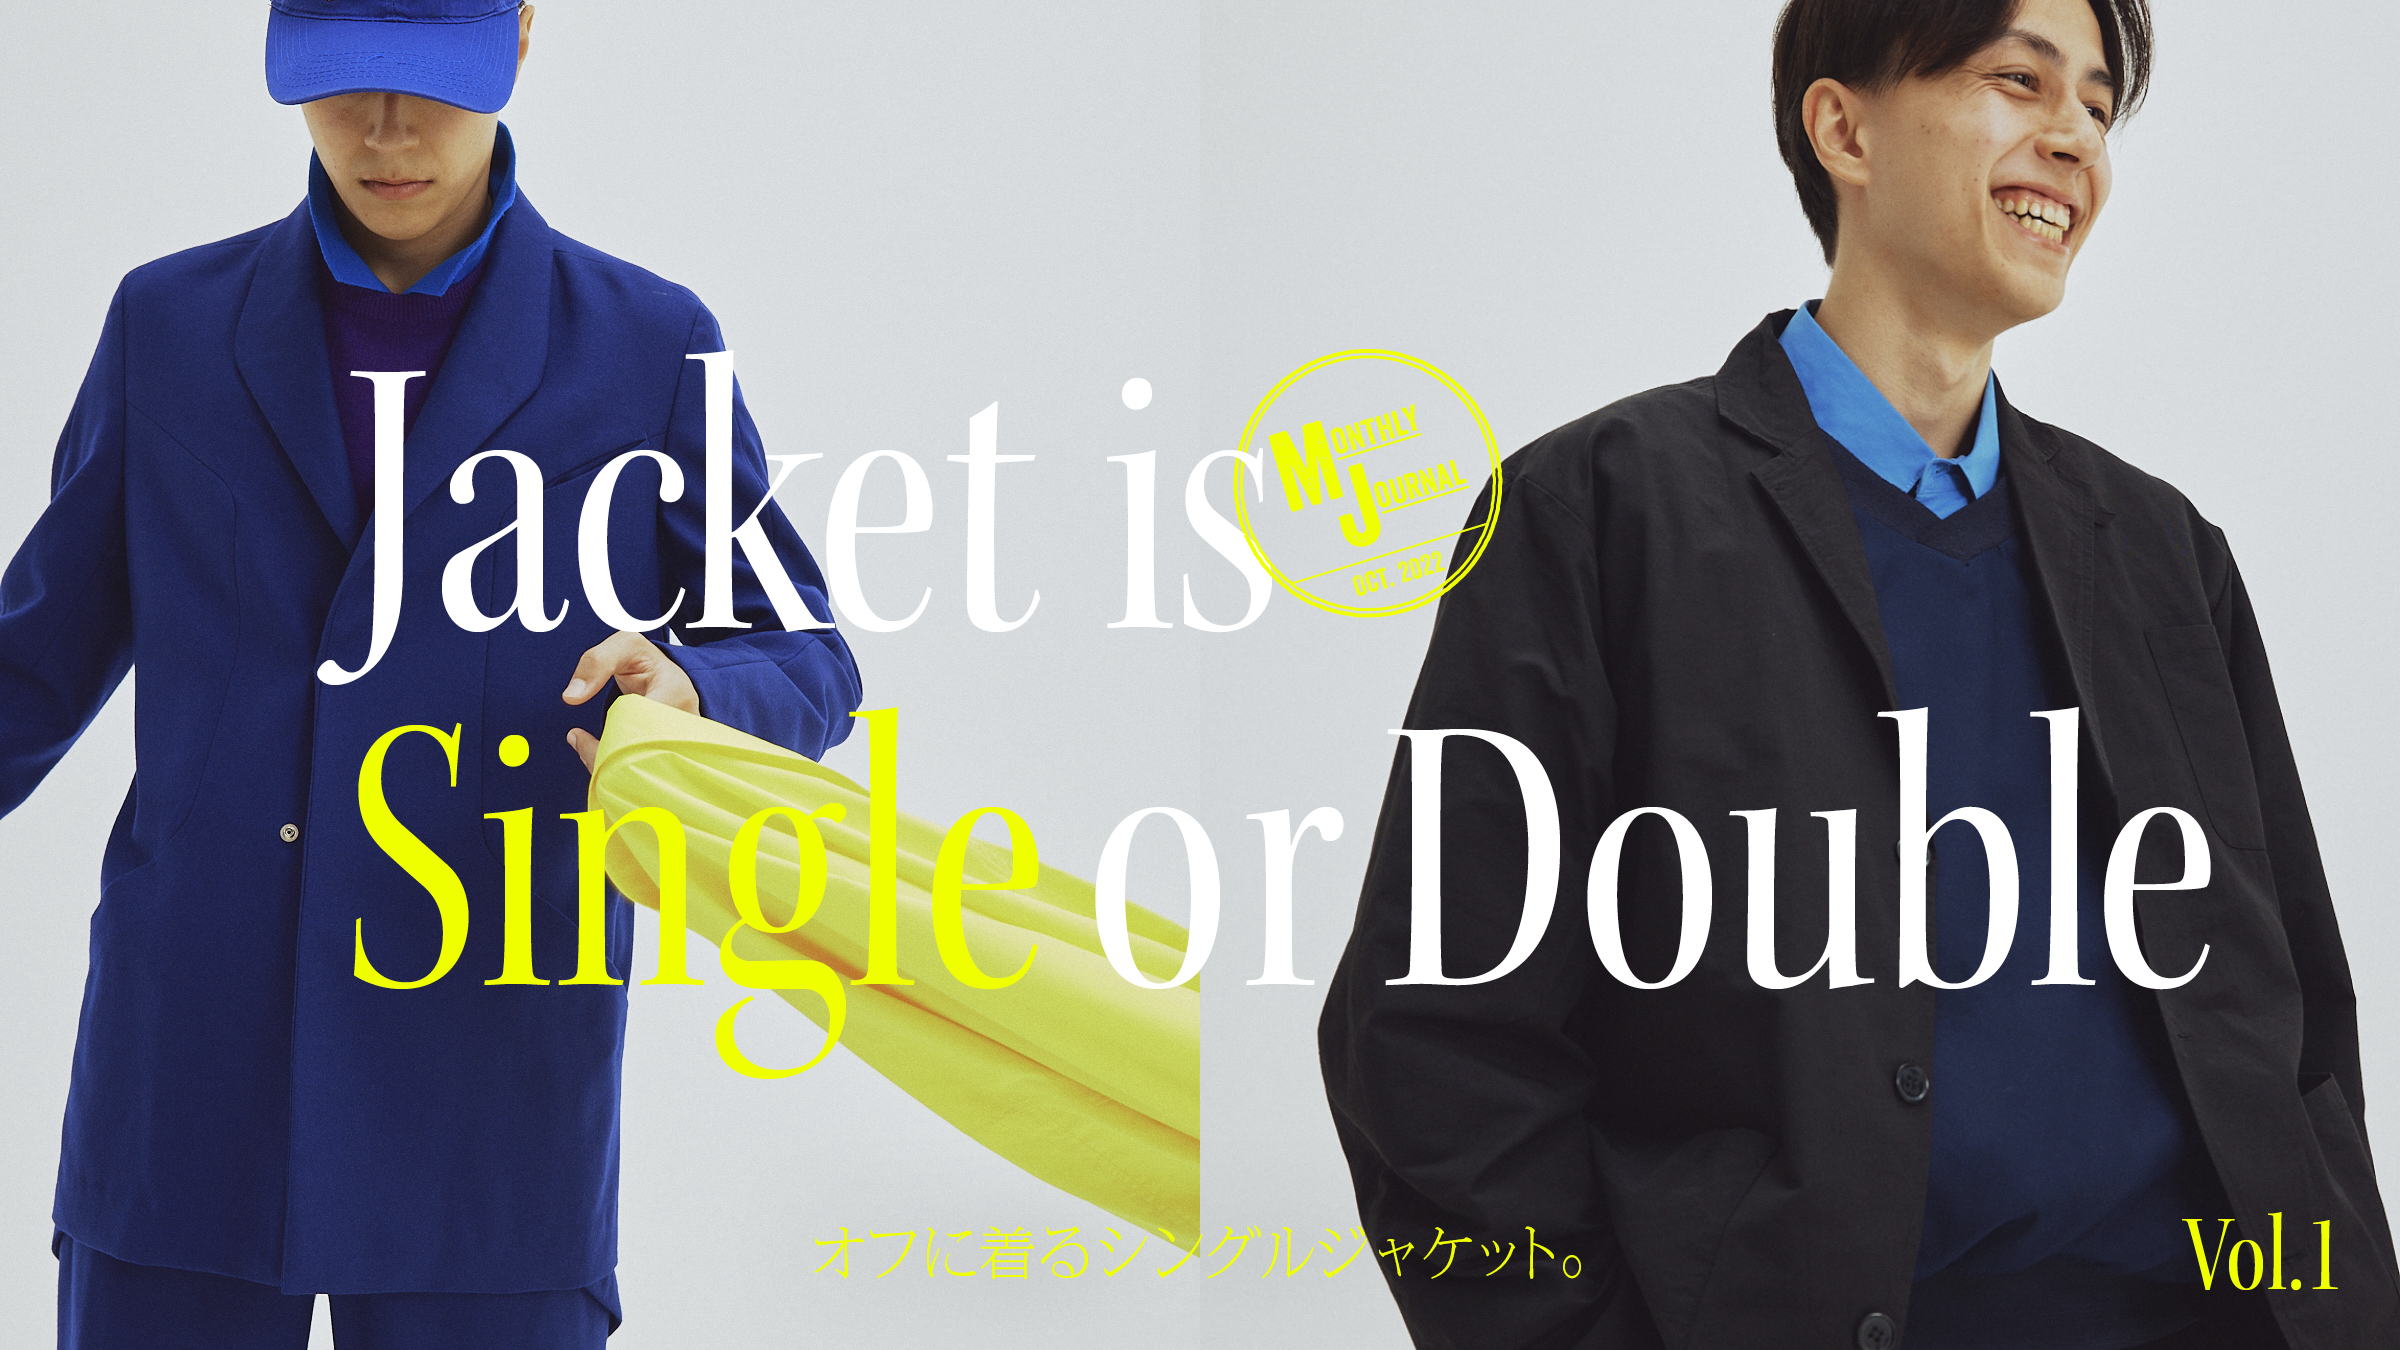 Jacket is Single or Double Vol.1オフに着るシングルジャケット。